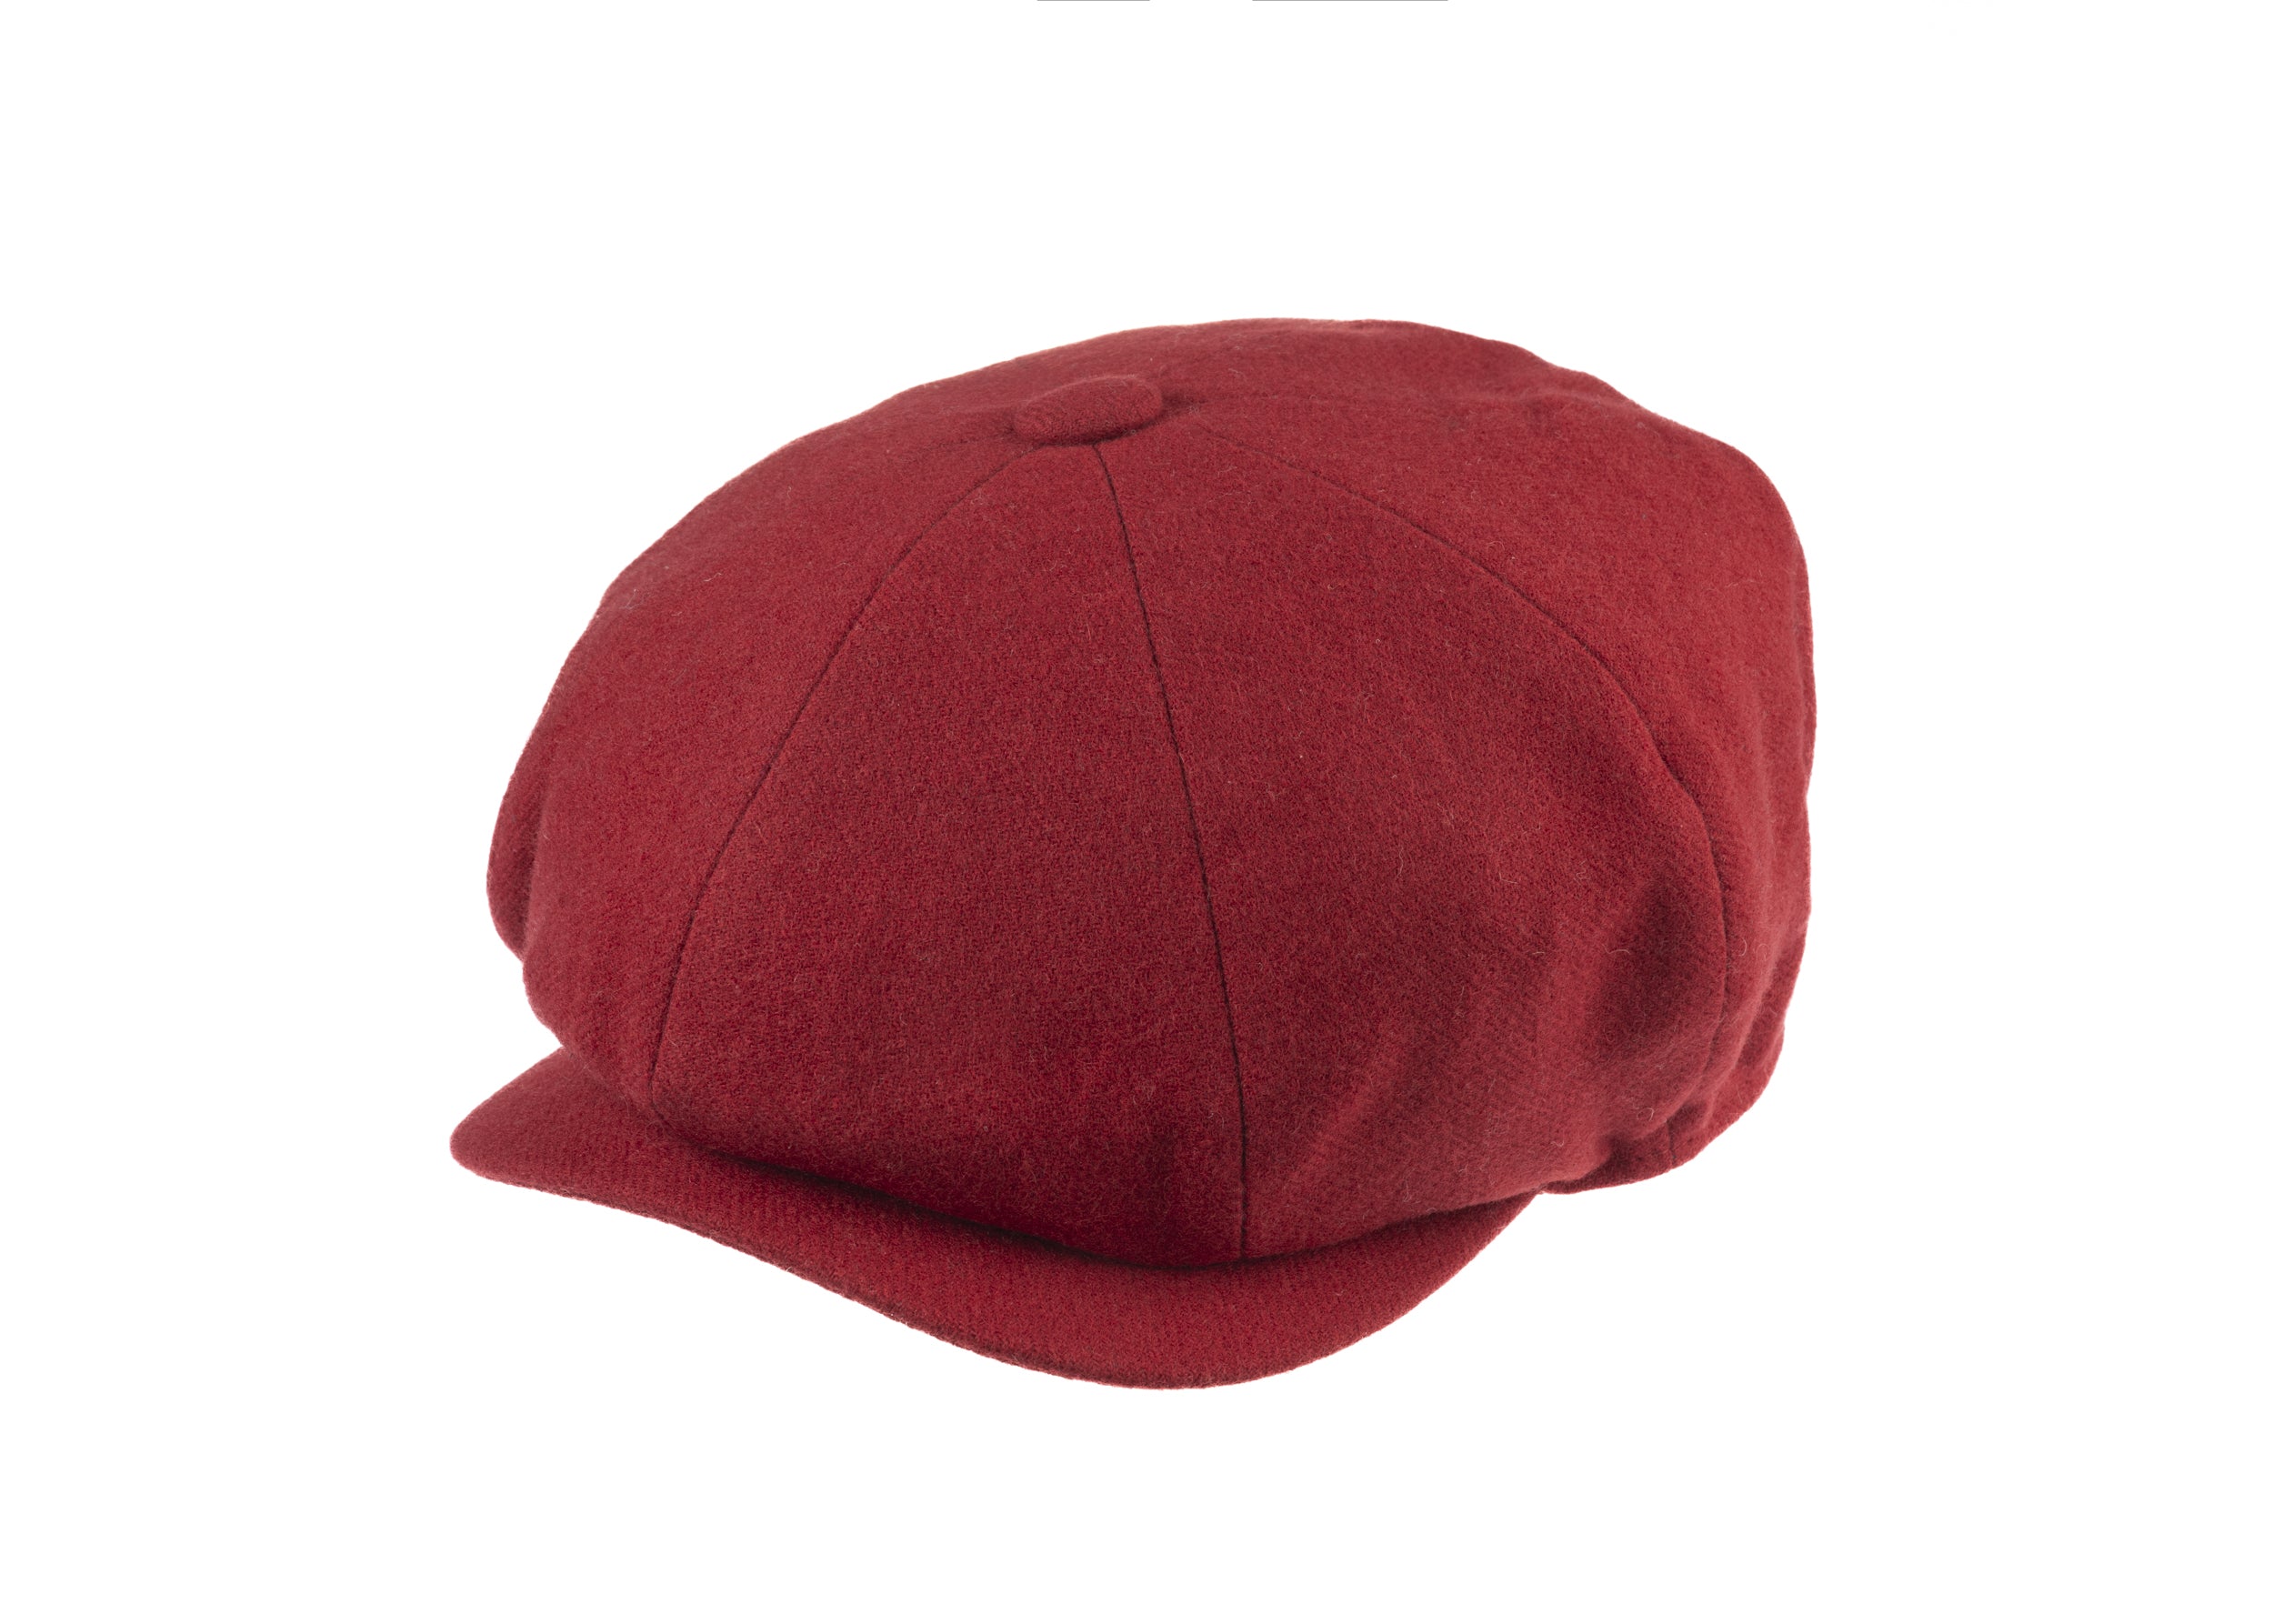 Josh 8 piece baker boy cap in cashmere/wool blend fabric in red